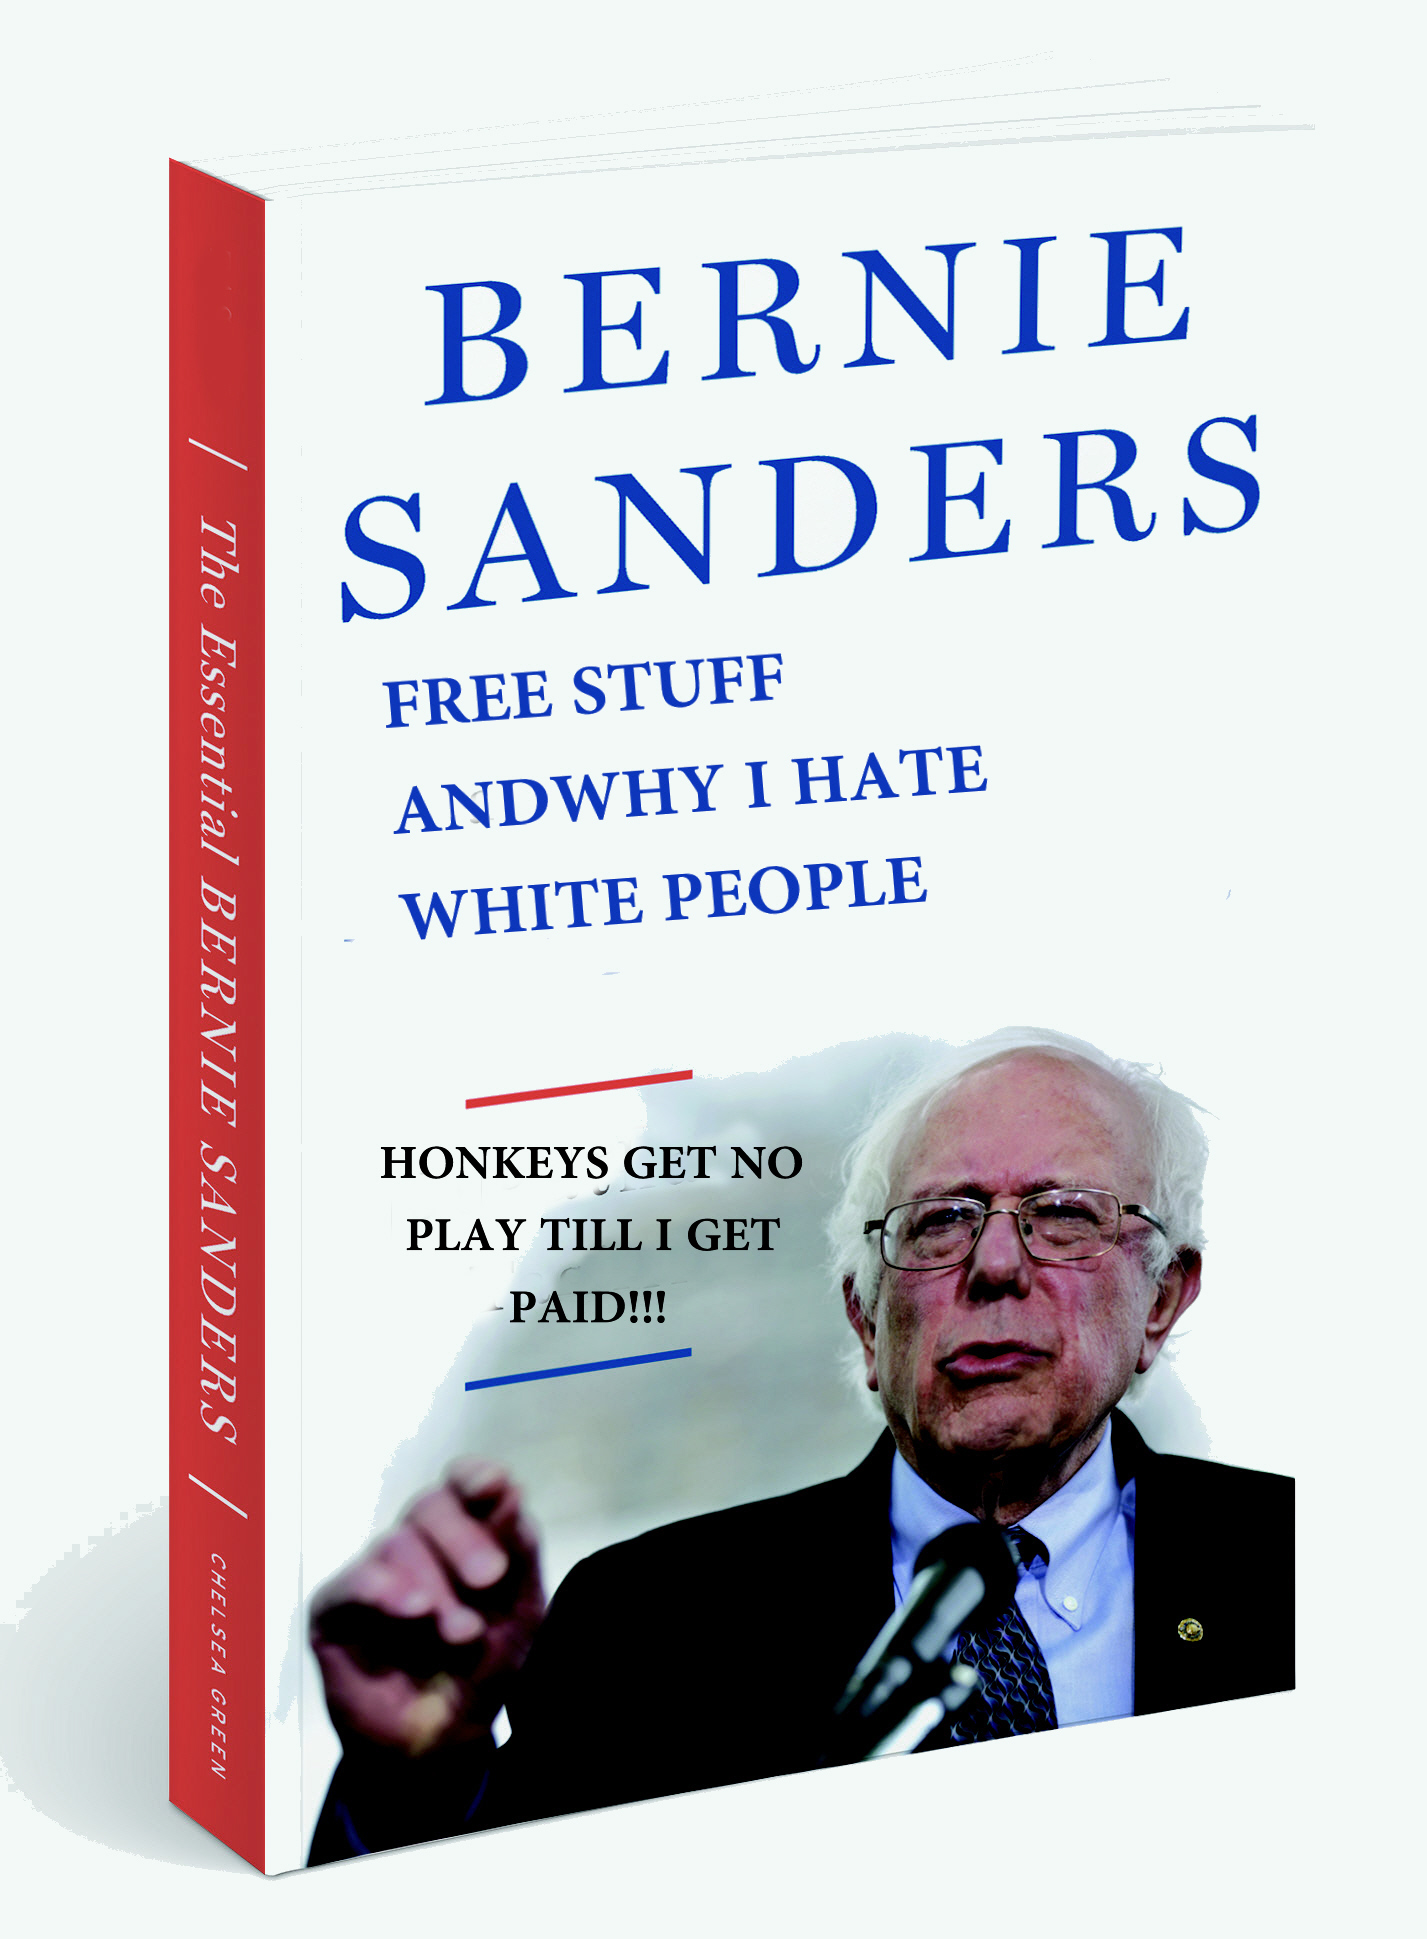 New Democrat Books